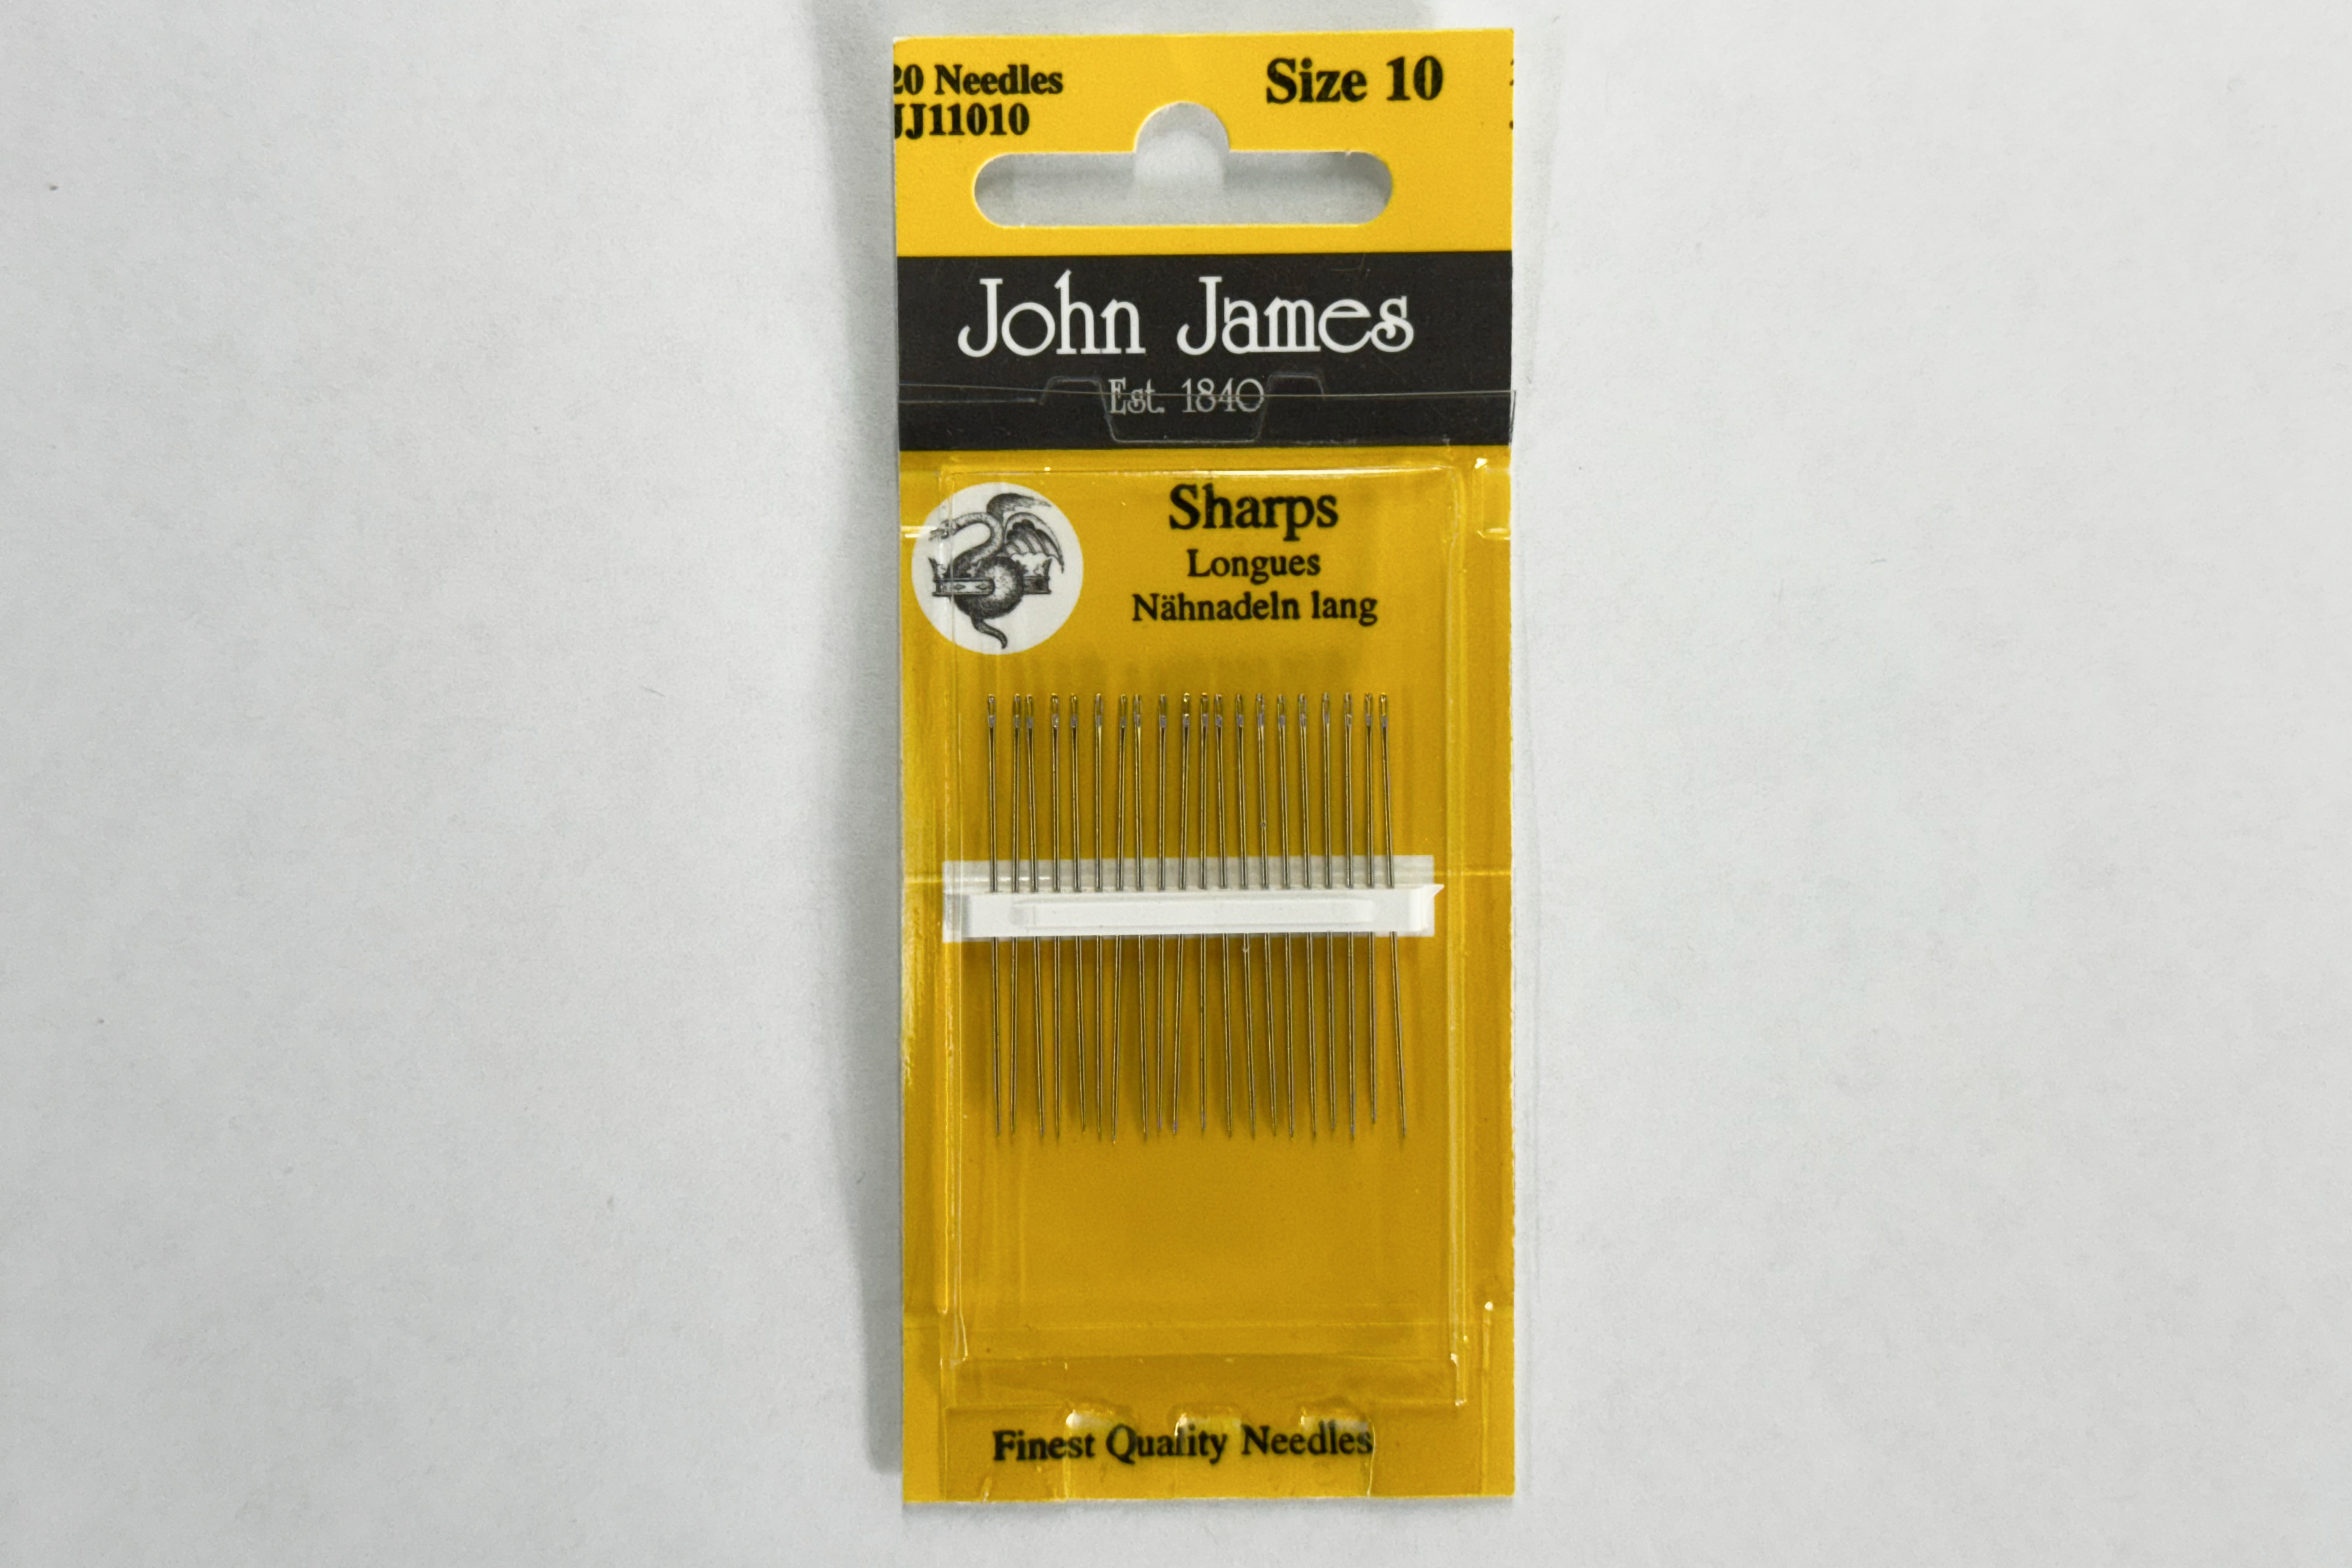 John James Needles - Sharps